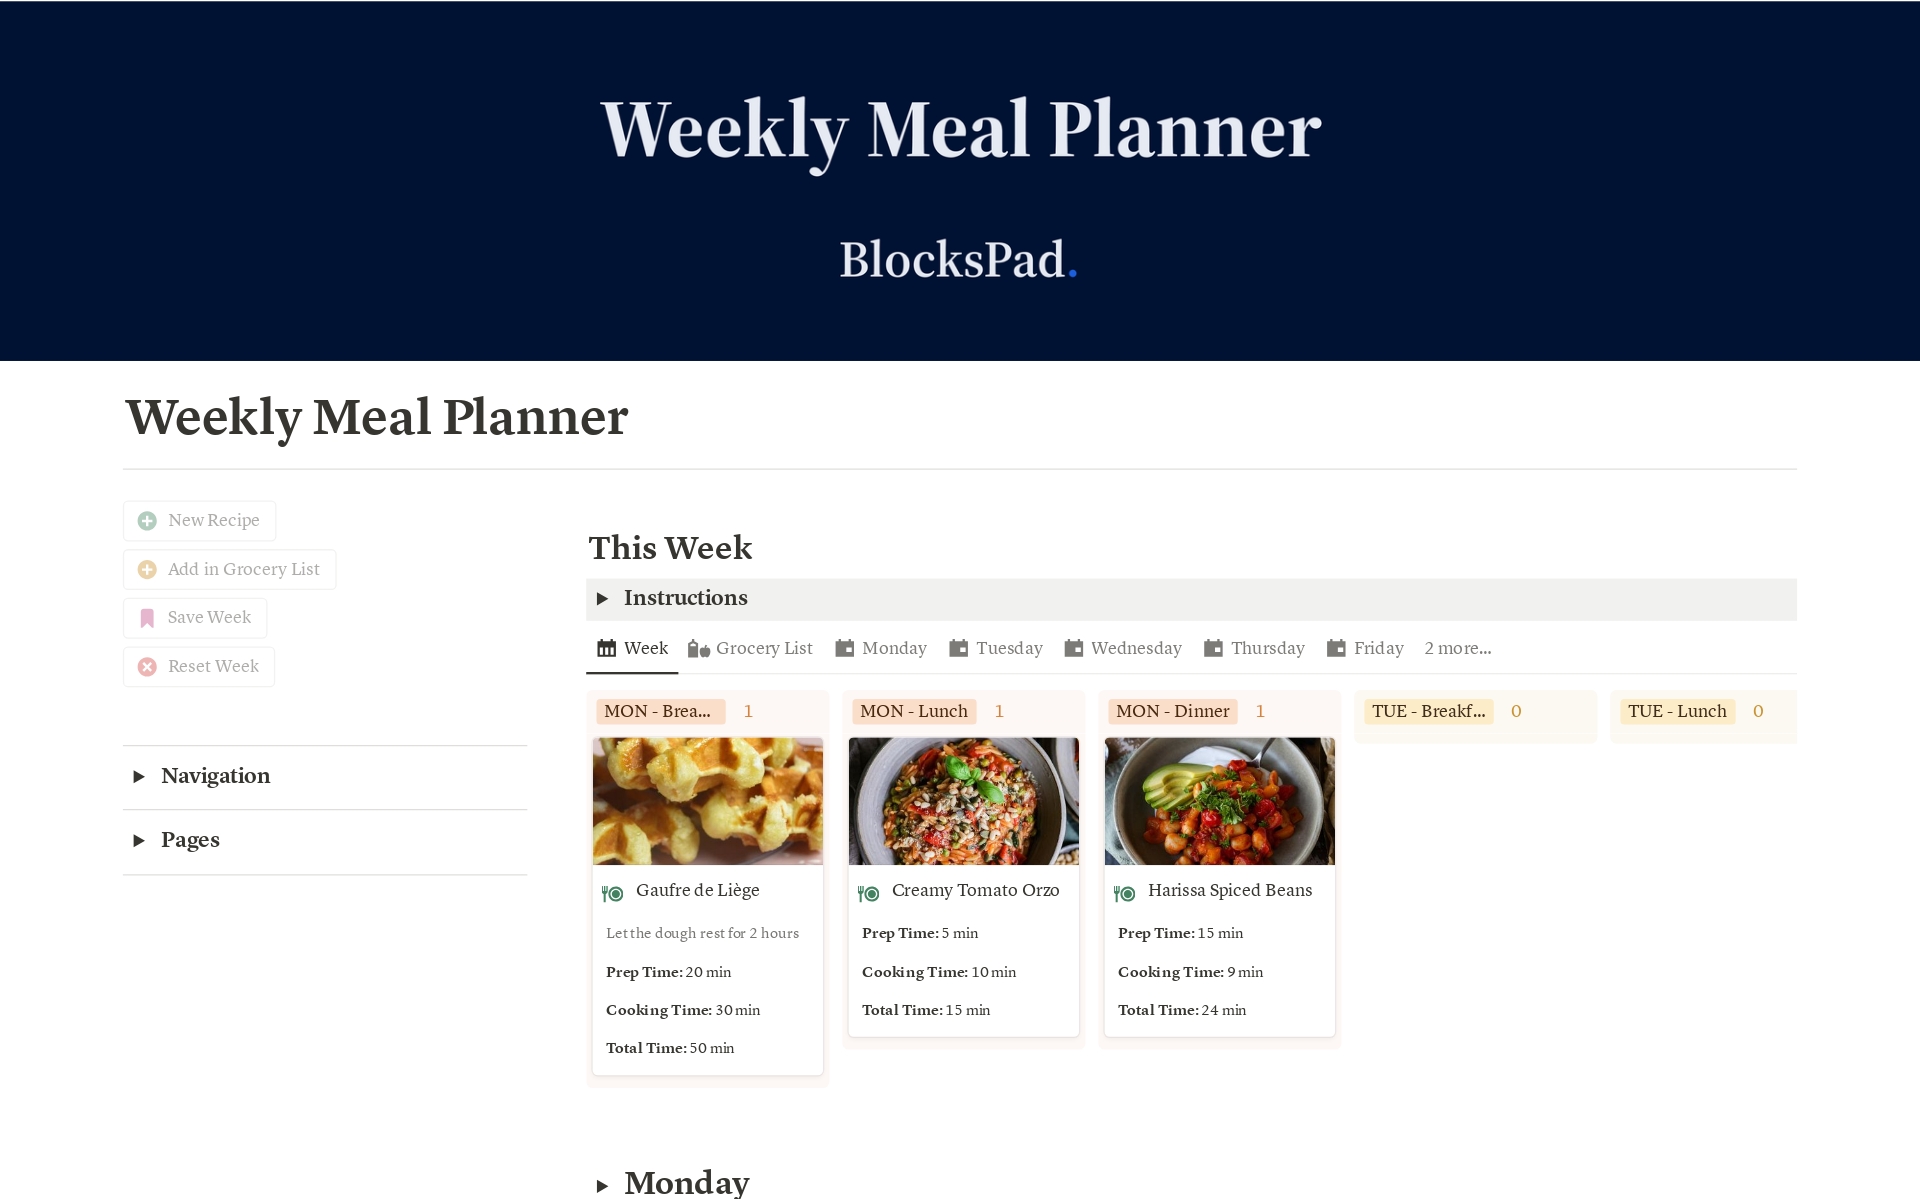 Aperçu du modèle de Weekly Meal Planner